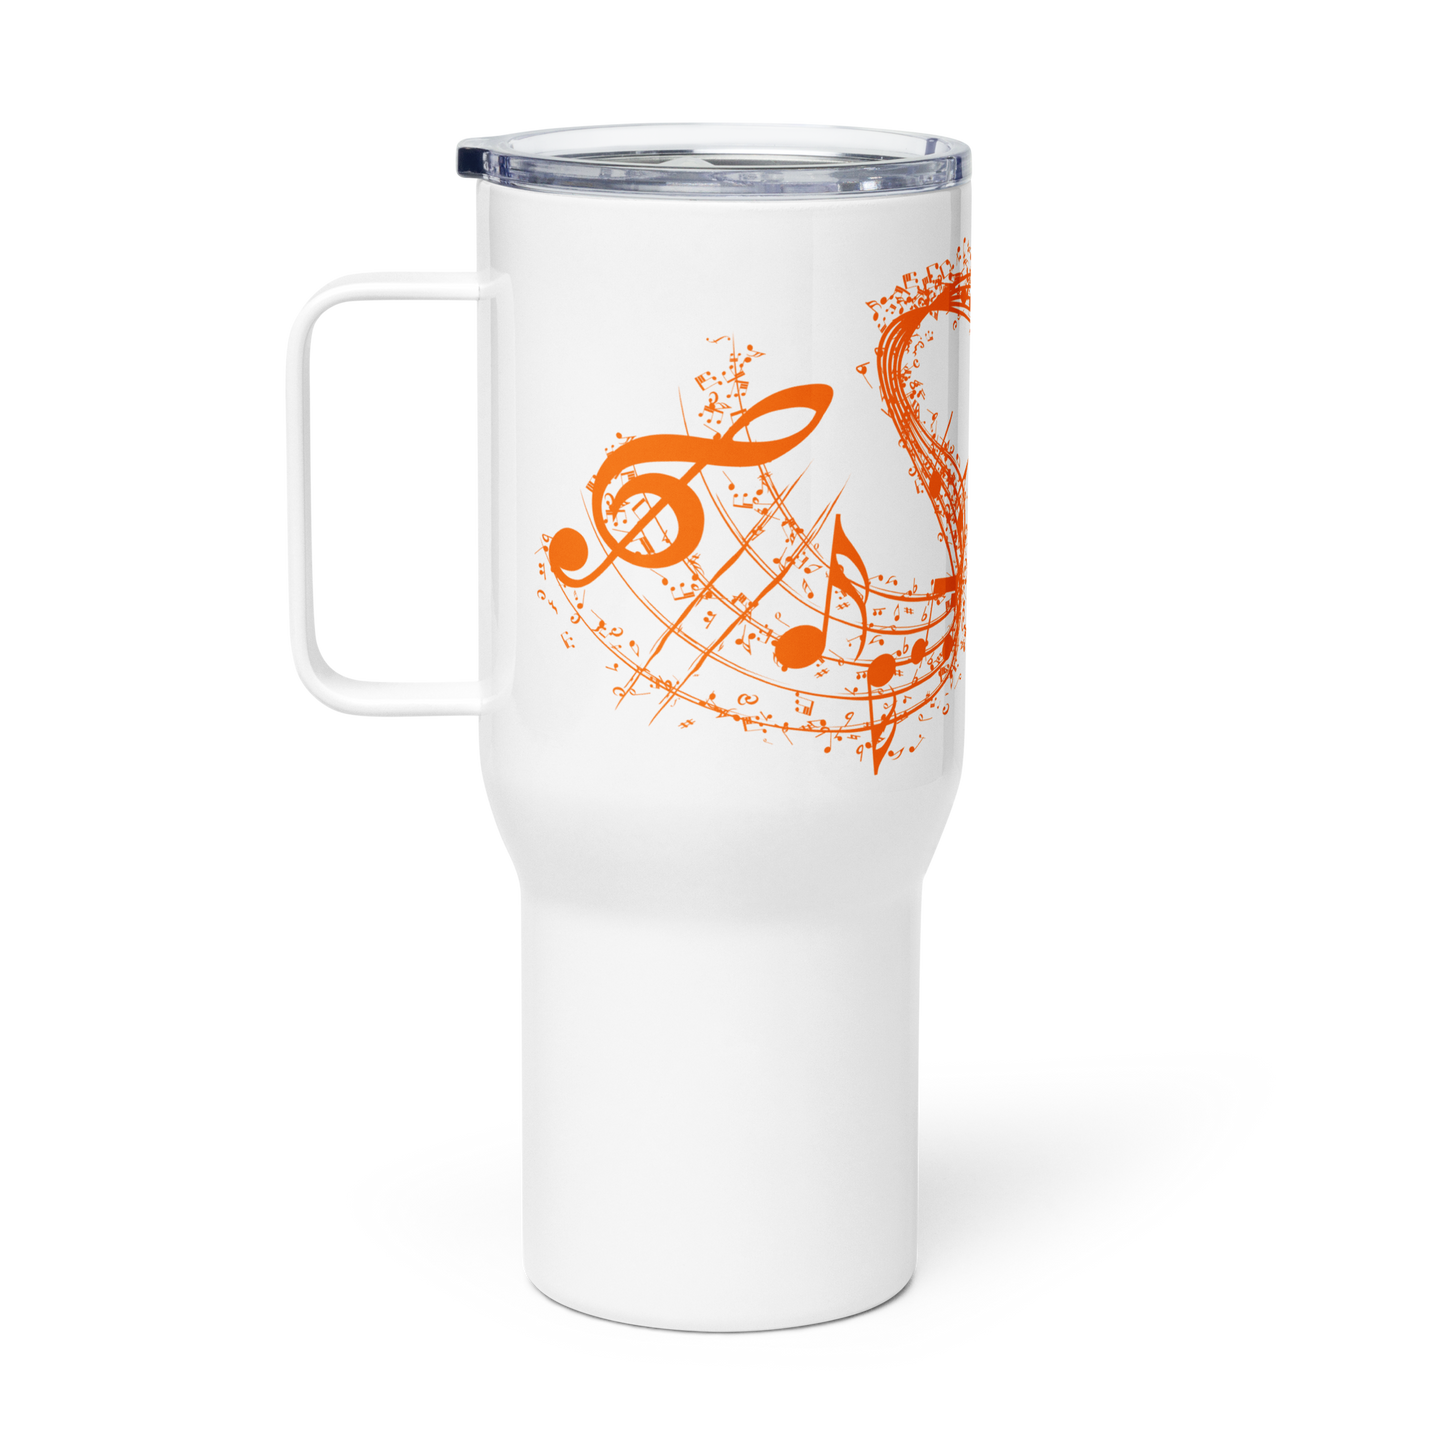 El Sistema PVTravel mug with a handle